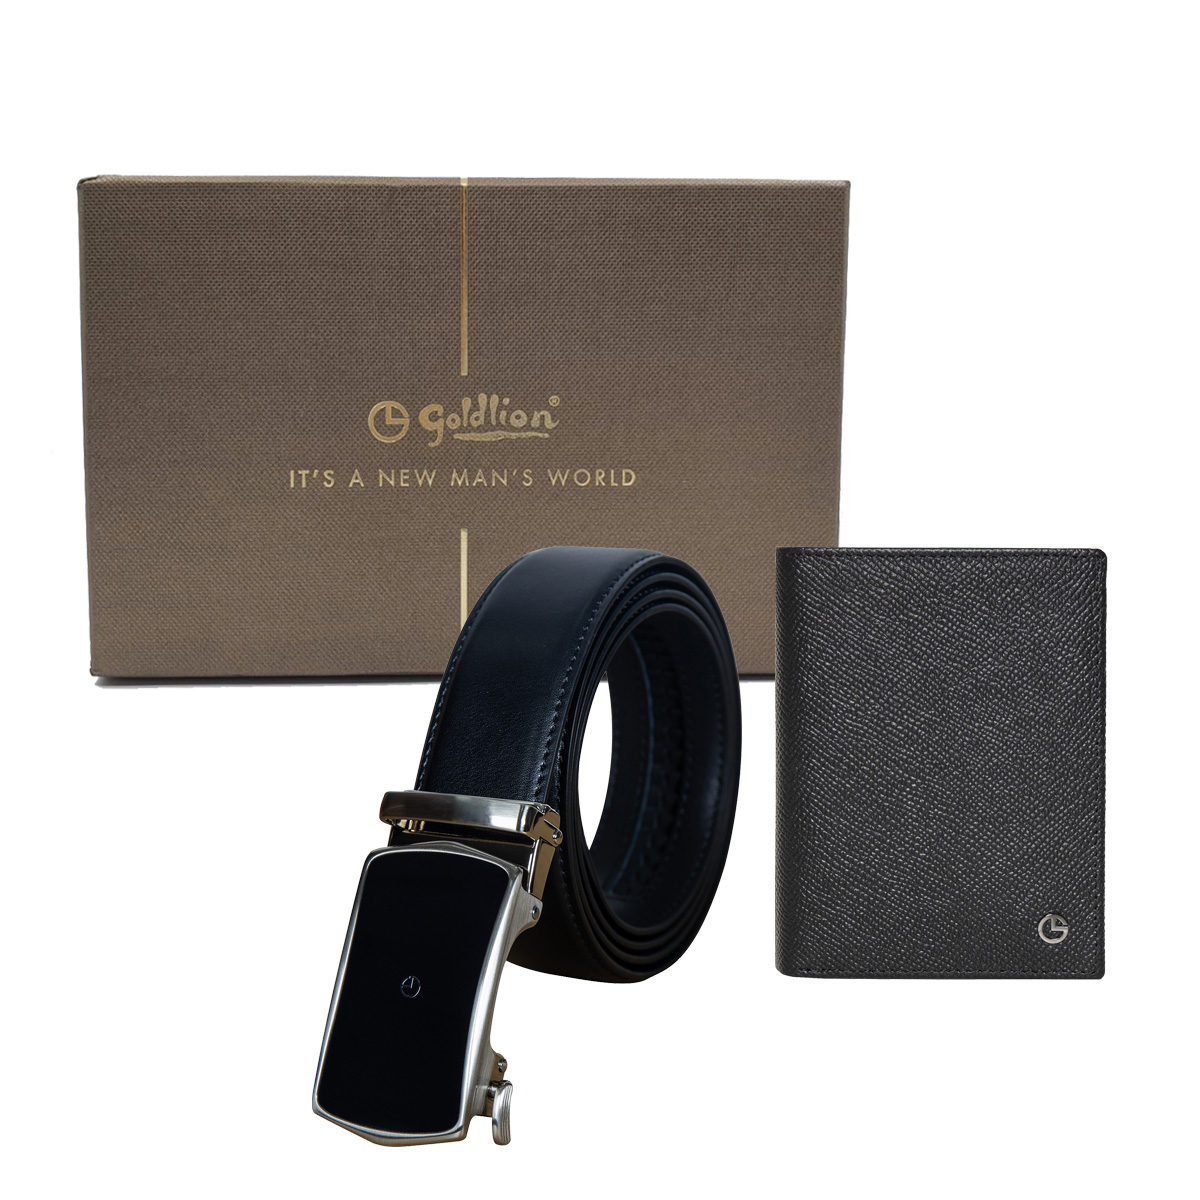 [Online Exclusive] Goldlion Genuine Leather Card Holder & Auto Lock Belt Gift Set